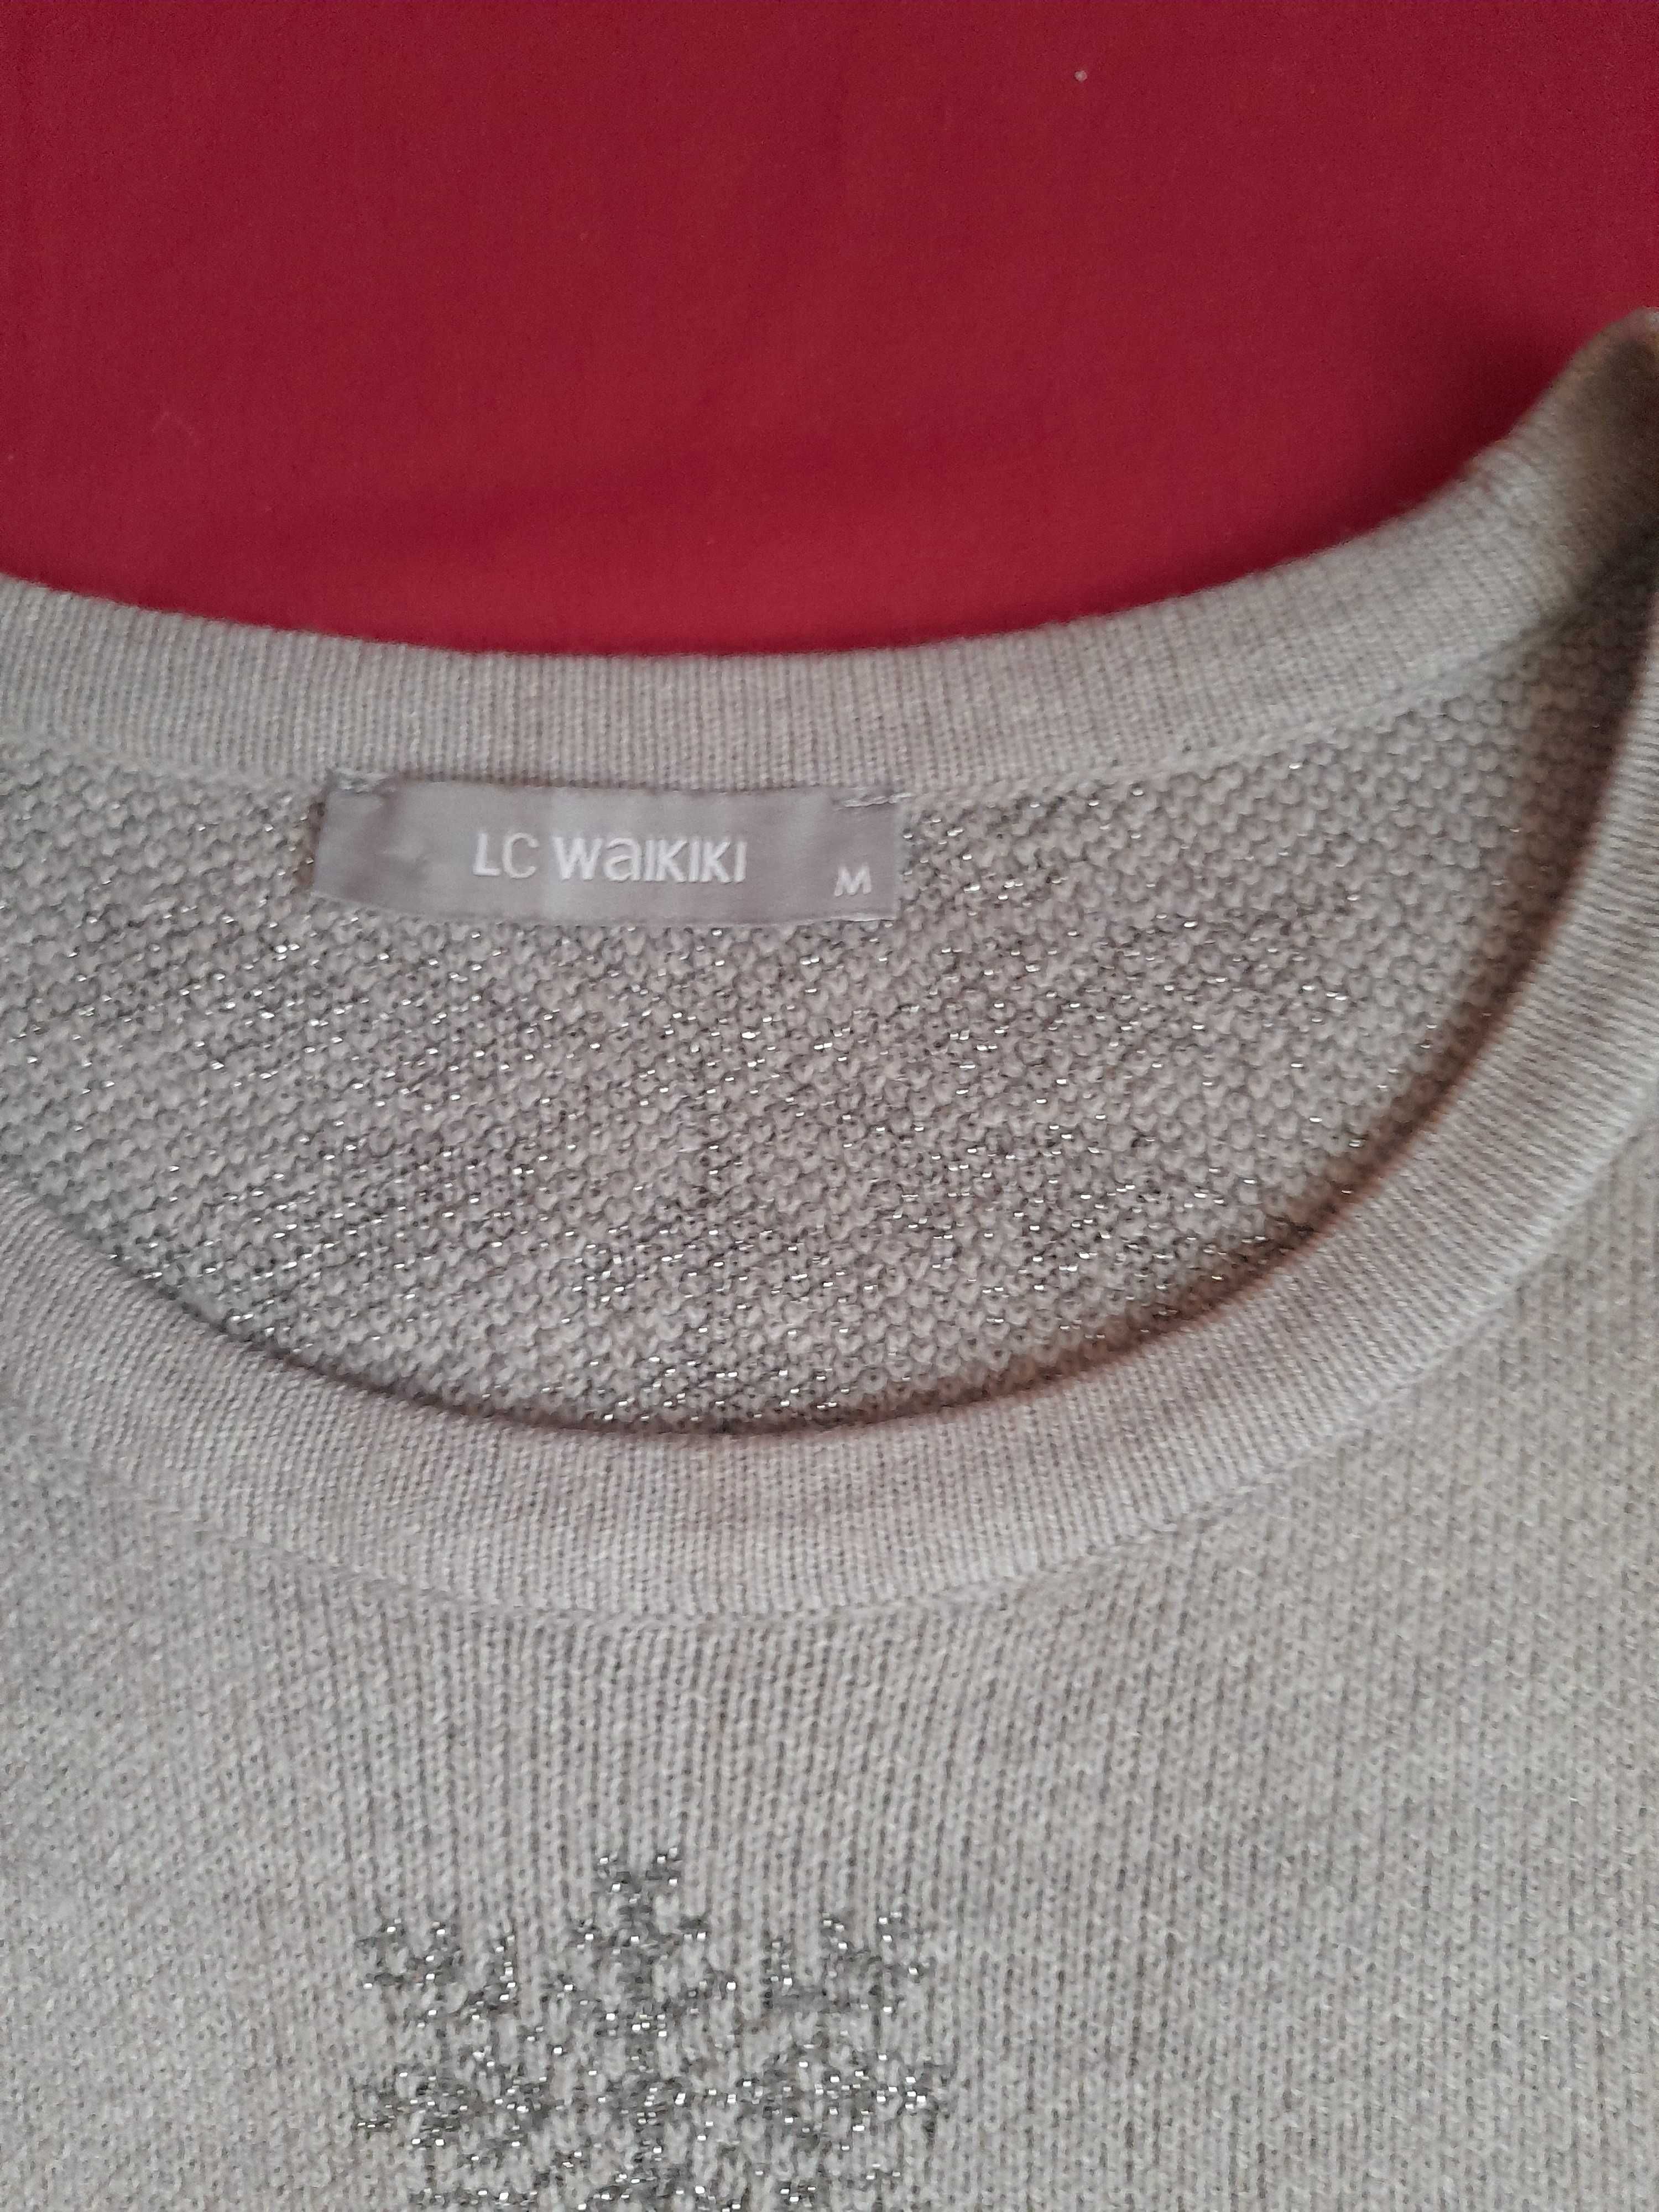 Джемпер, свитер  LC WAIKIKI  серого цвета размер М